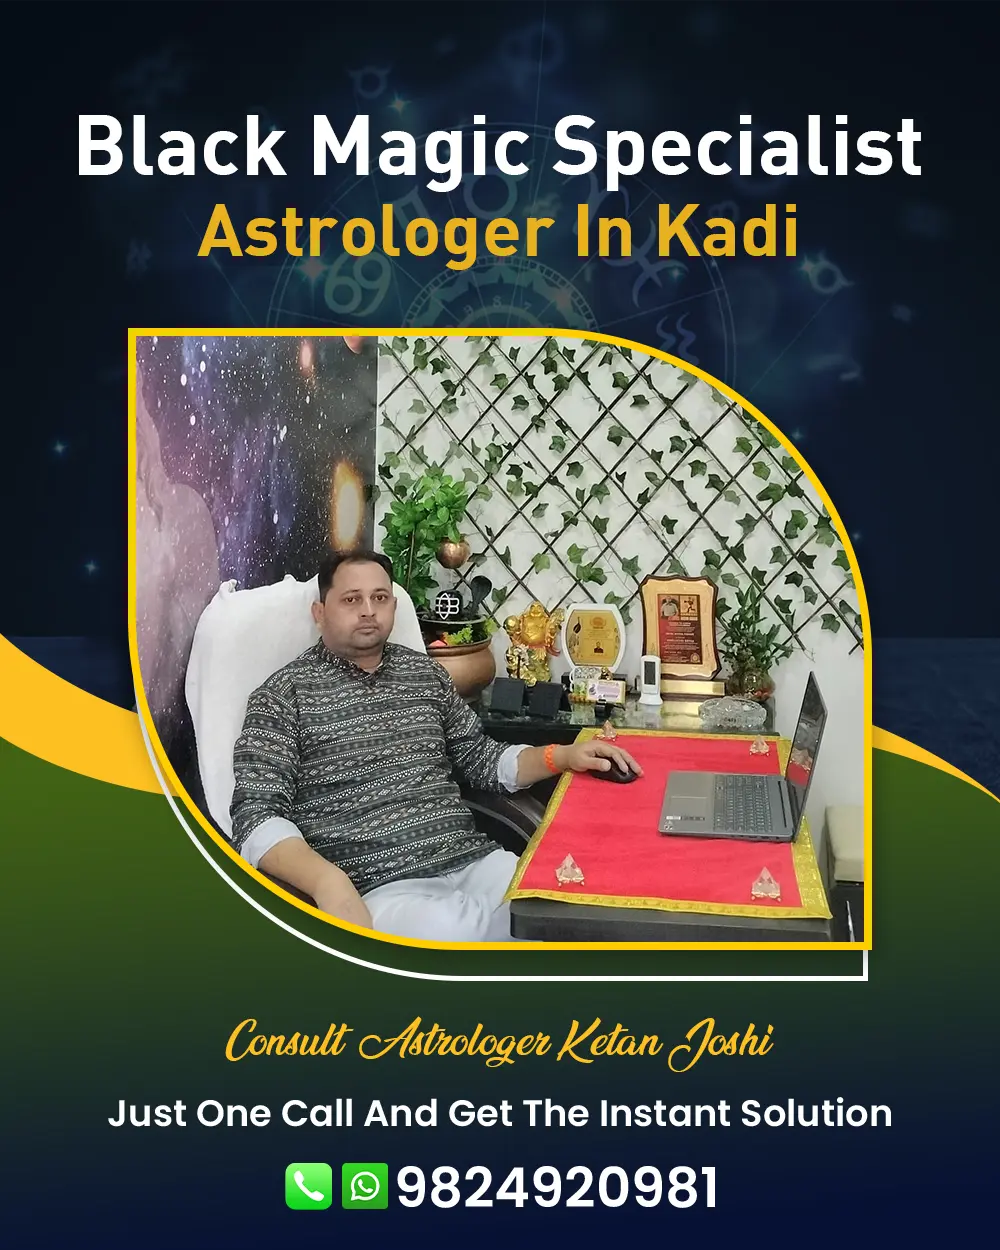 Black Magic Specialist Astrologer In Kadi